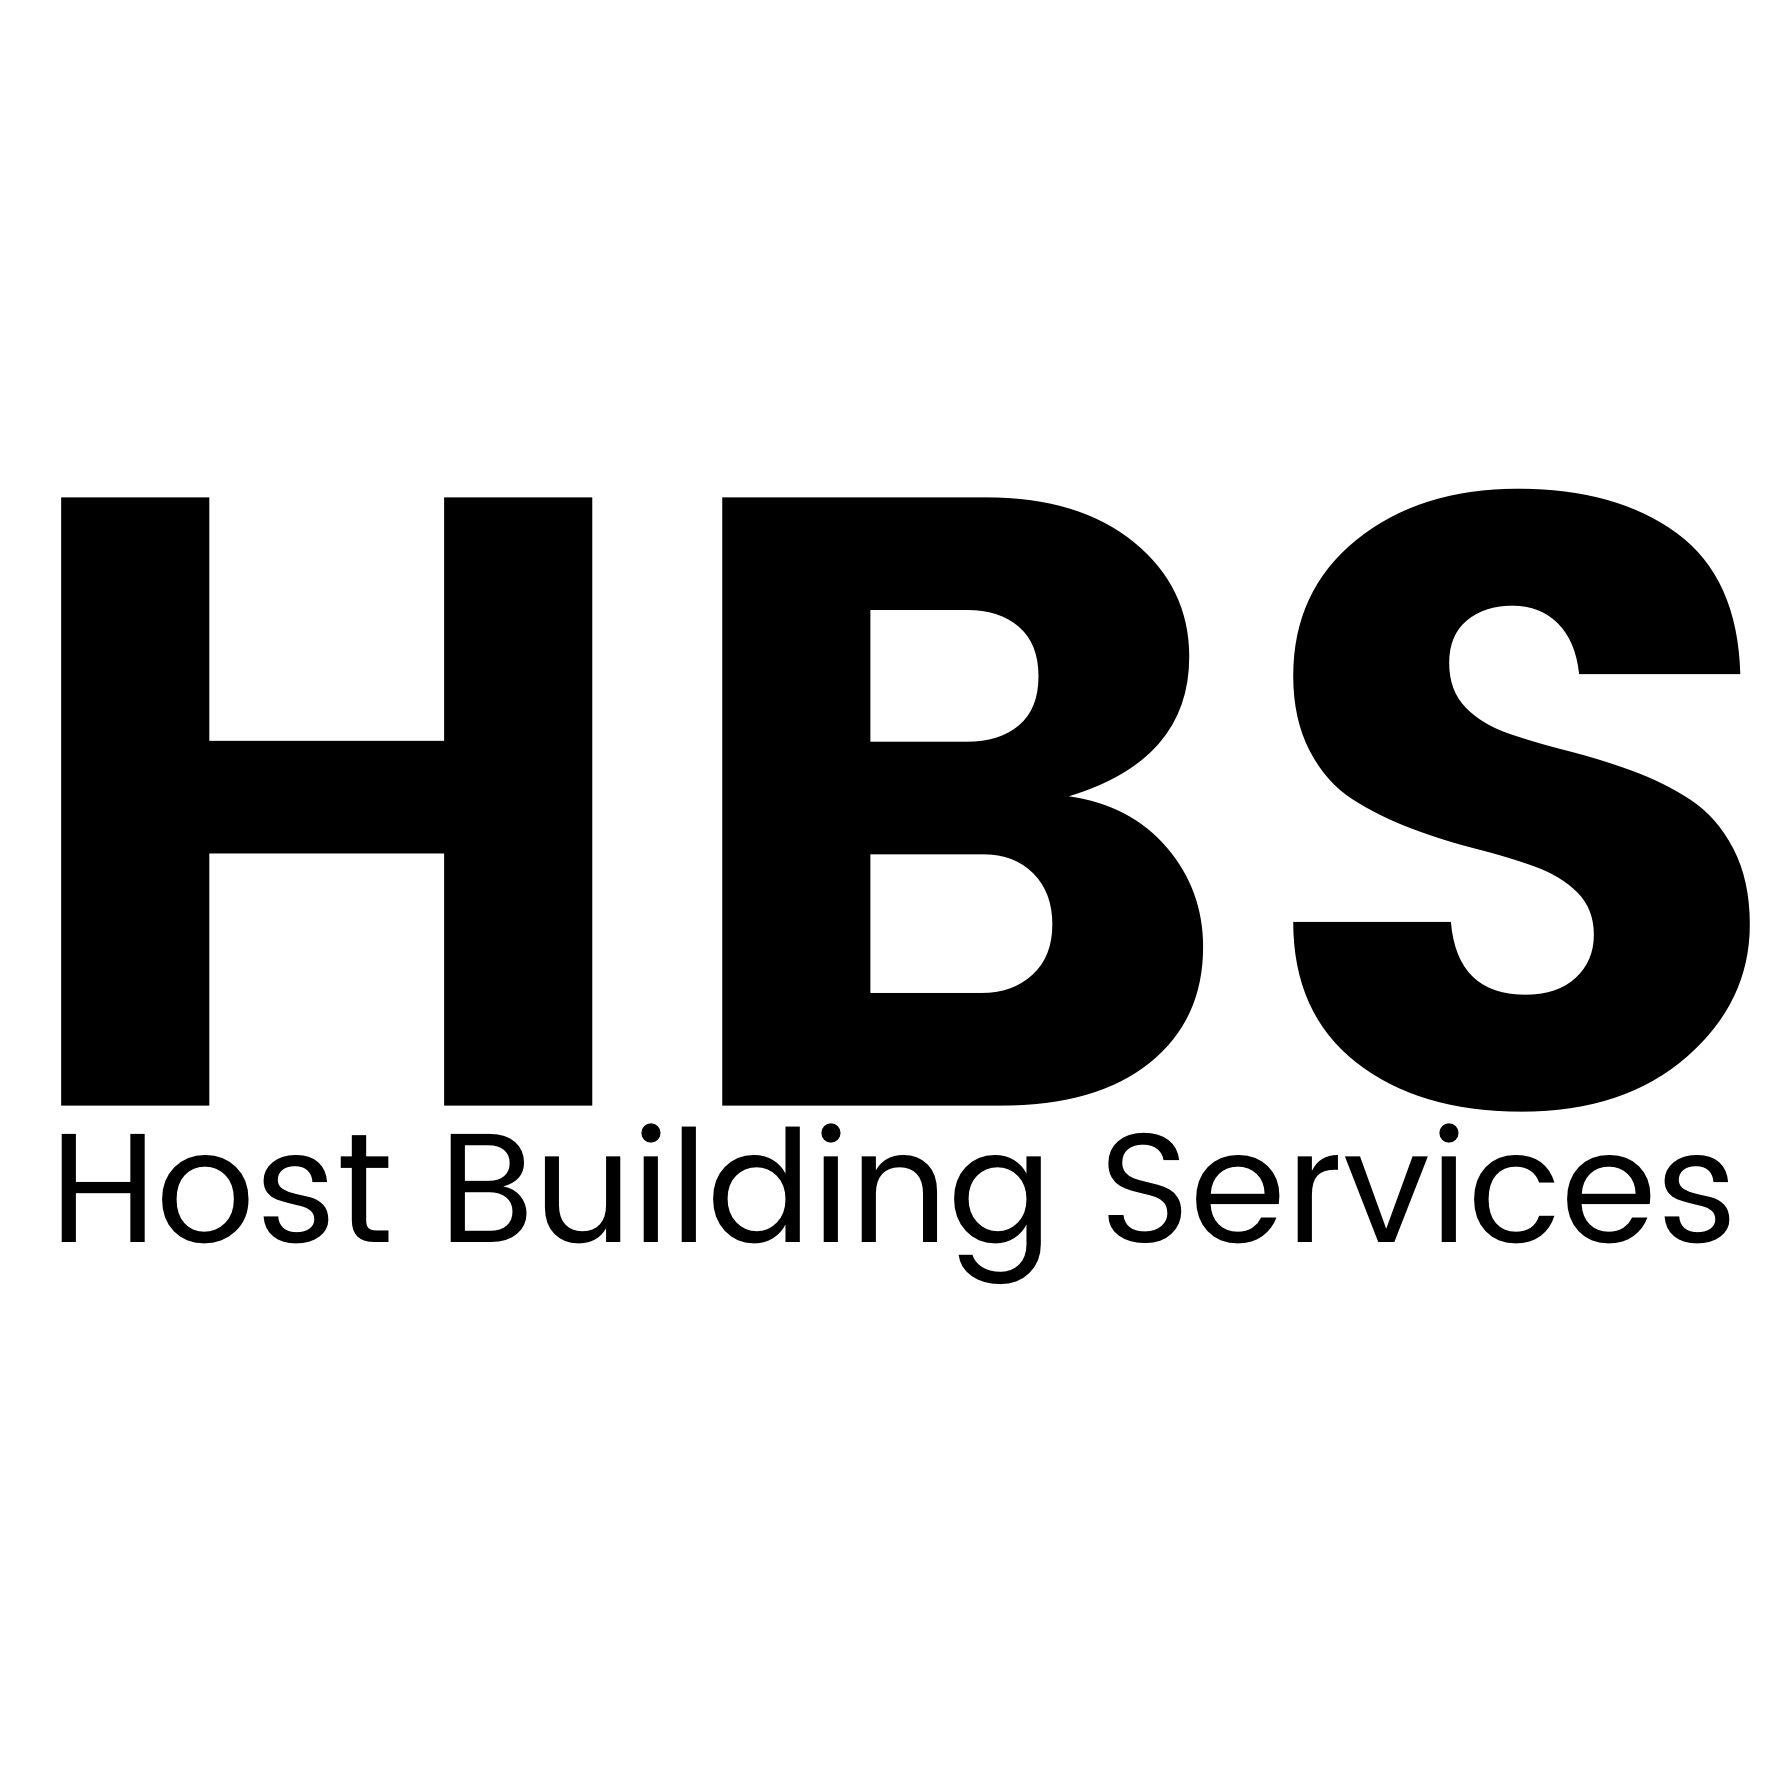 Host Building Services